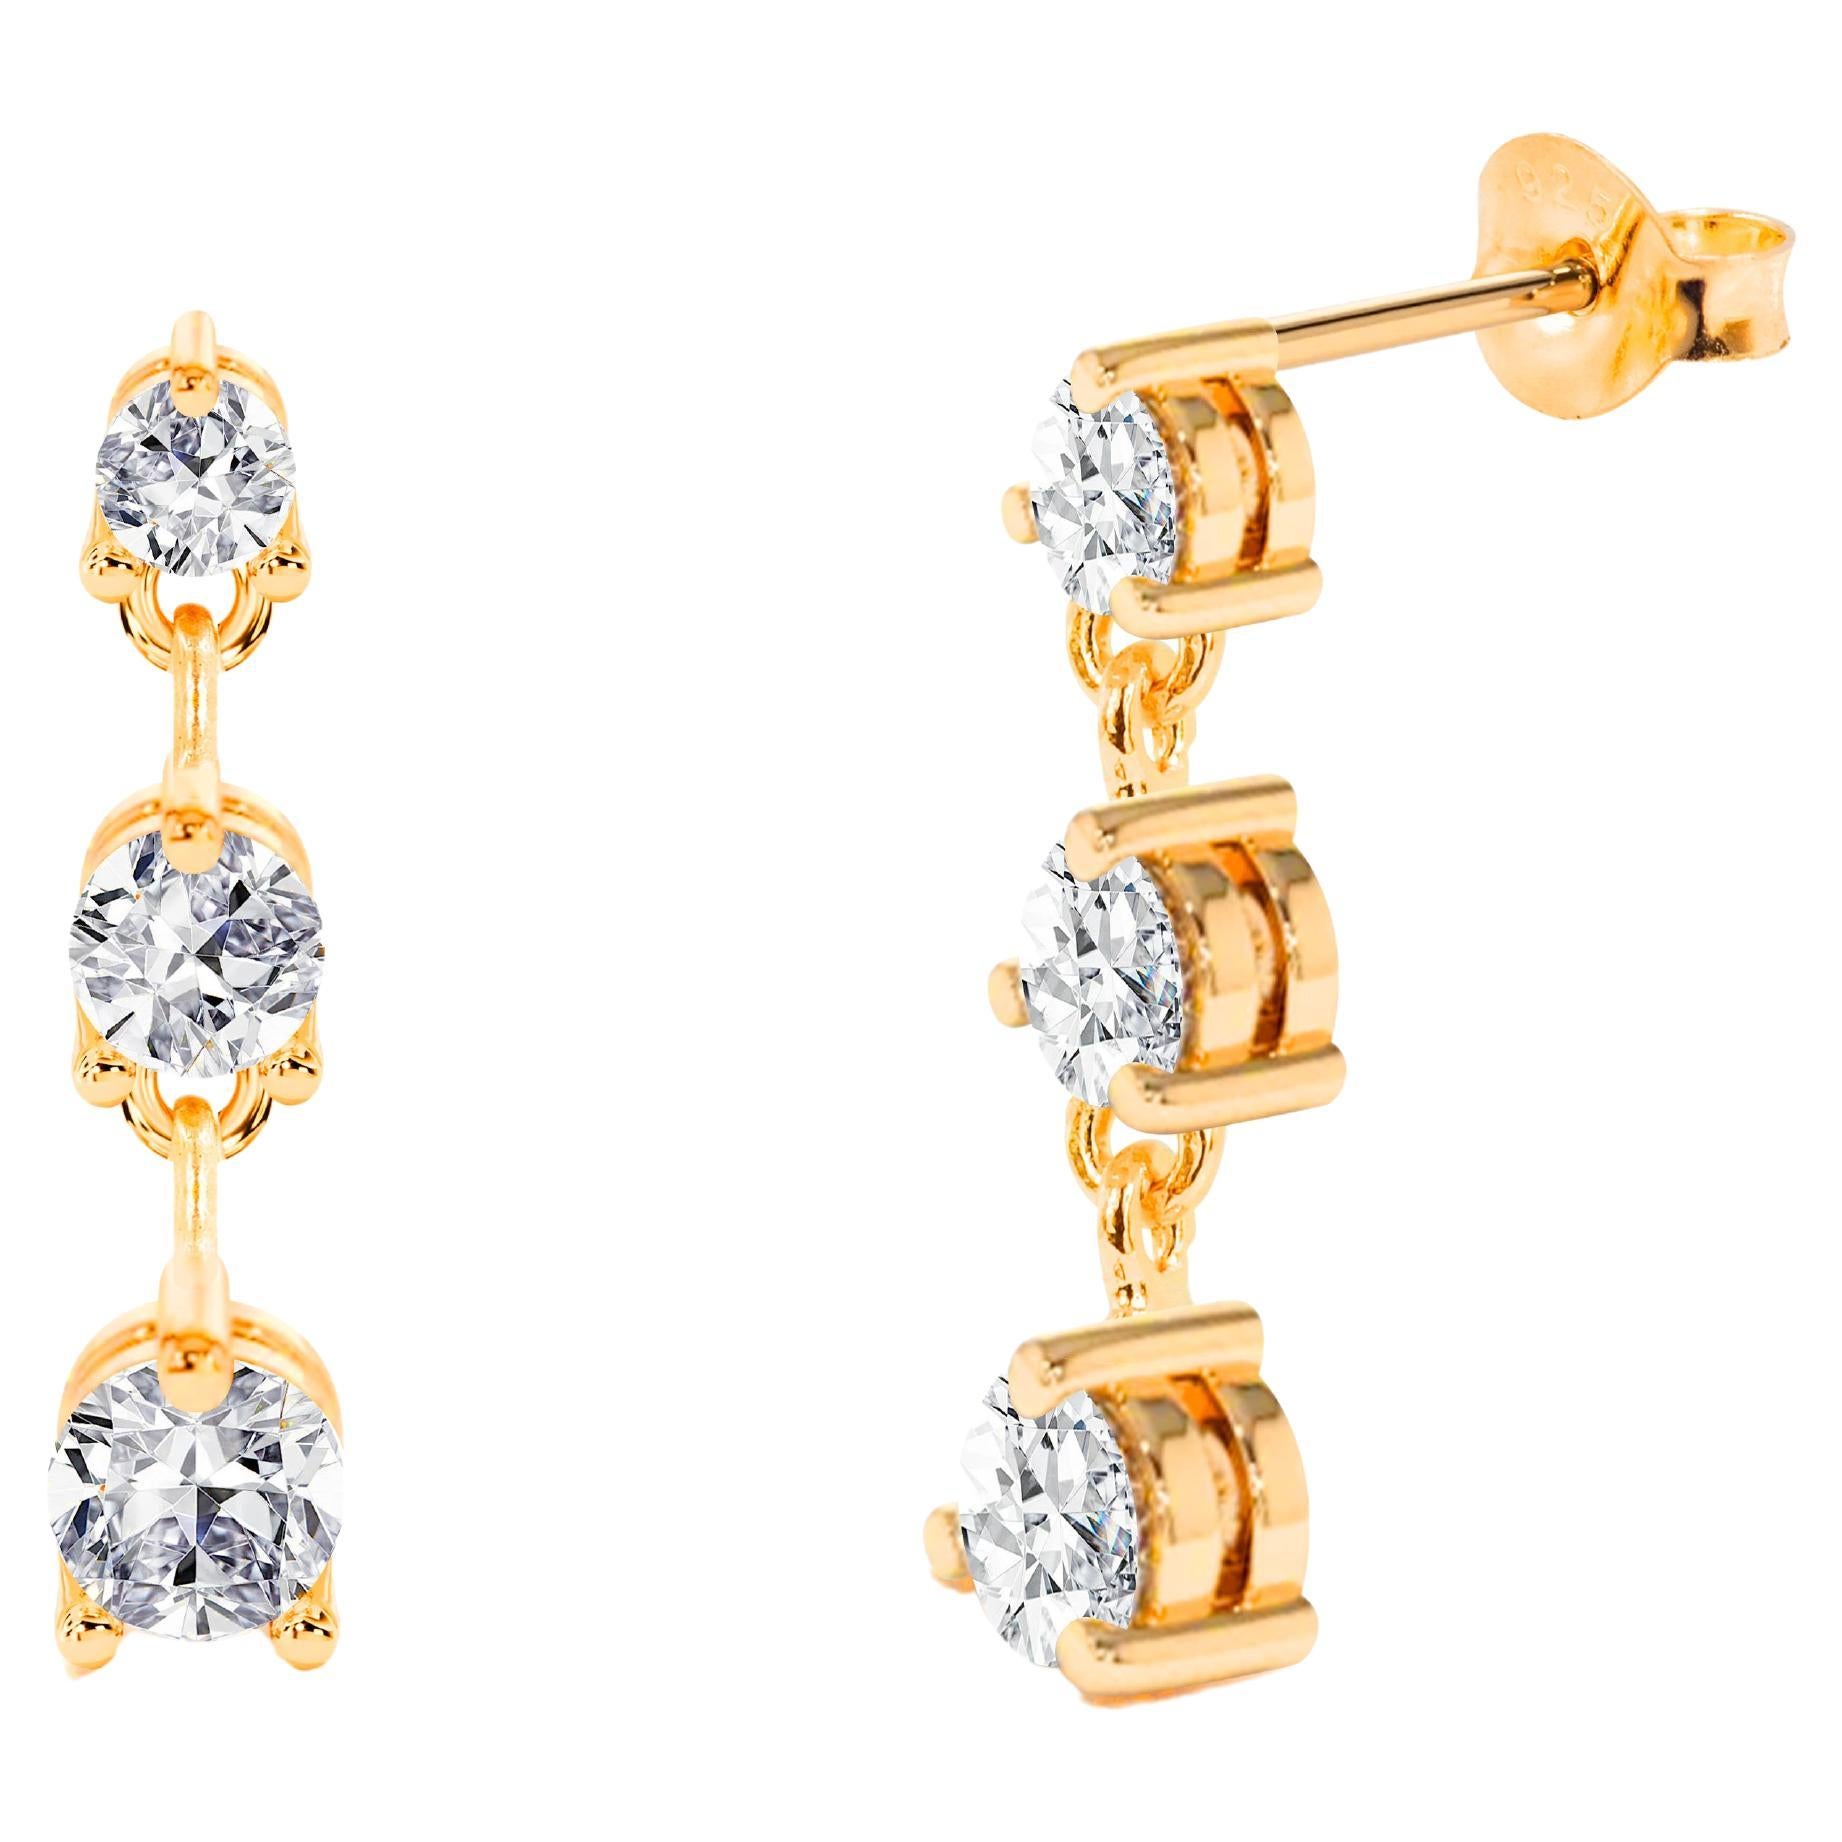 0.45ct Diamond Studs Earrings in 14k Gold For Sale